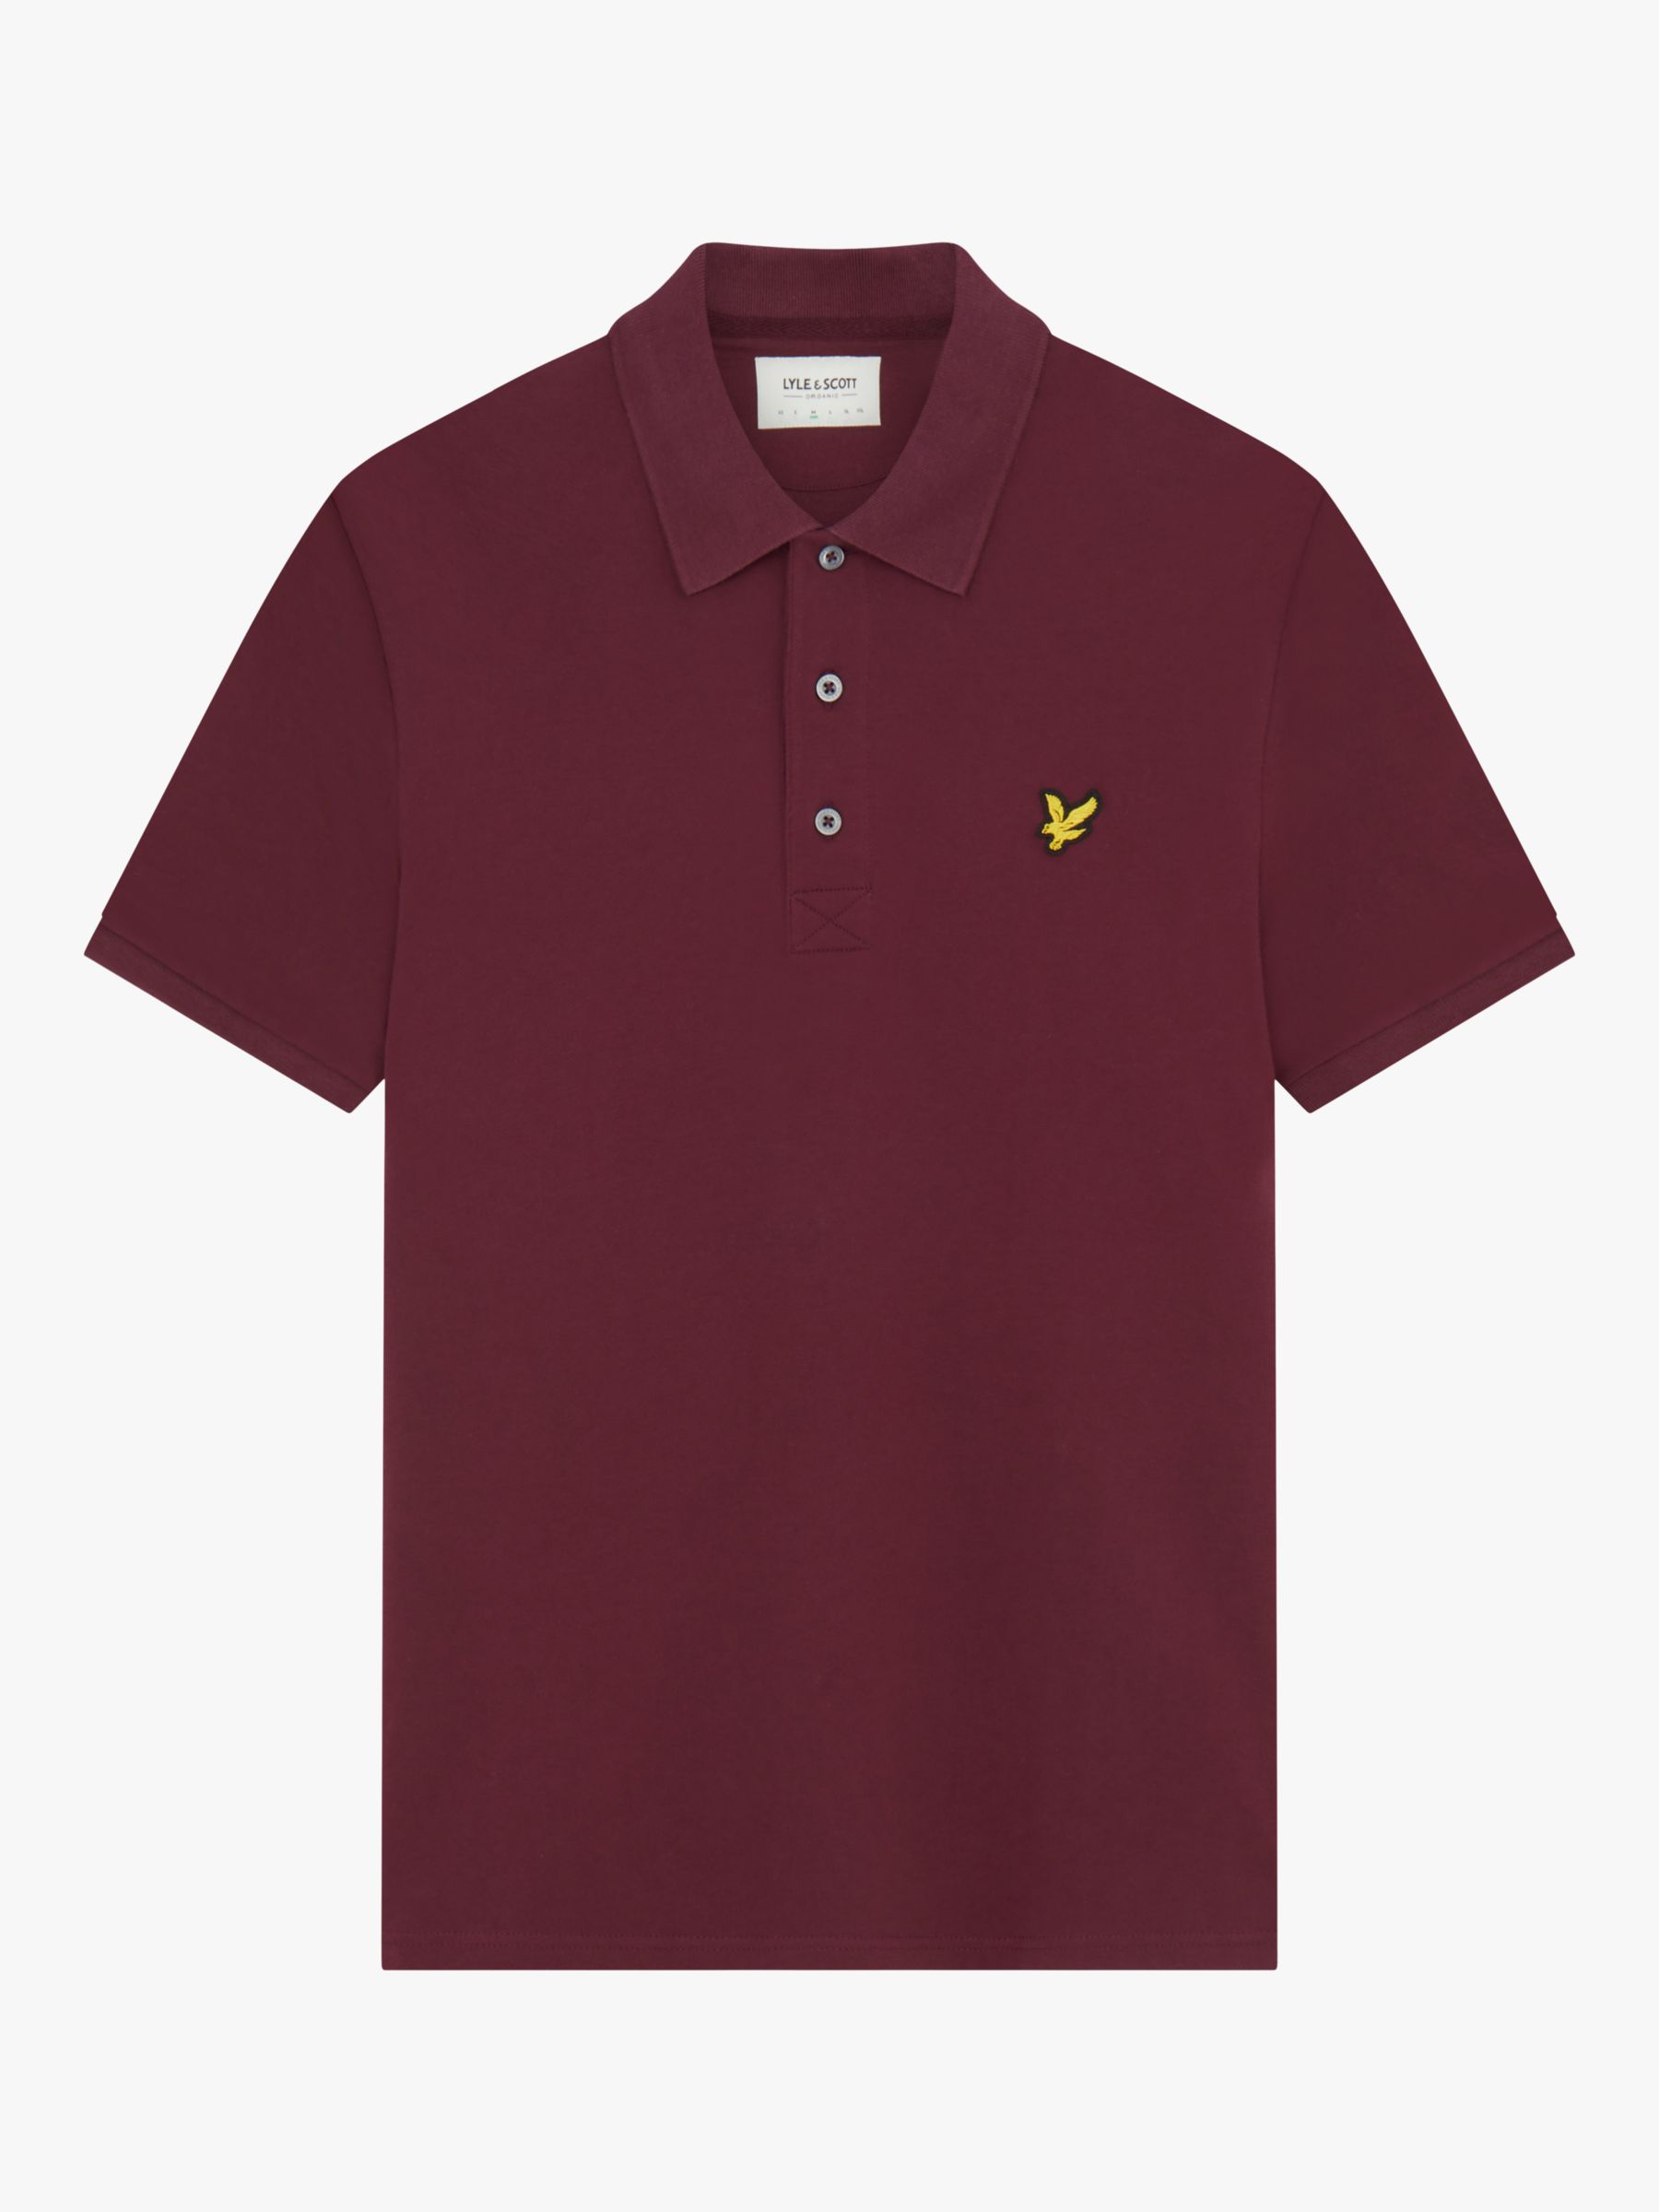 Lyle & Scott Short Sleeve Polo Shirt, Burgundy, L